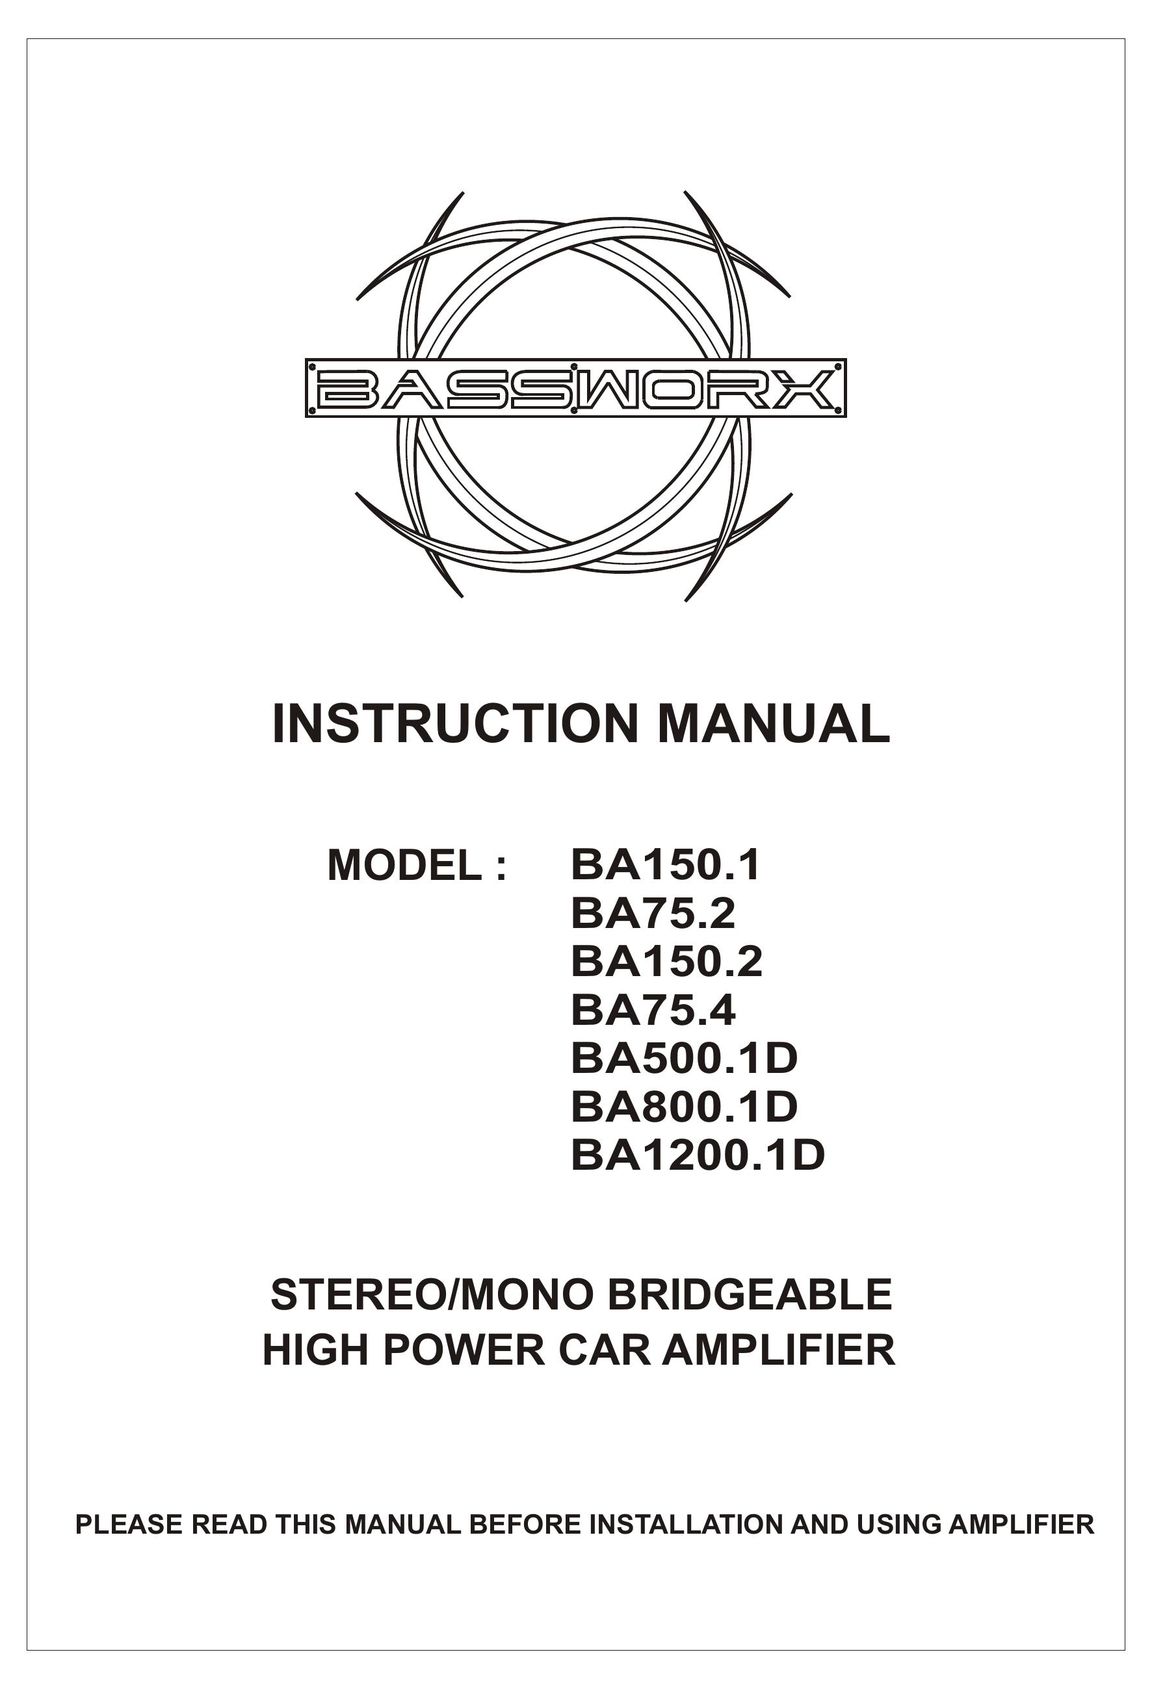 Bassworx BA1200.1D Car Amplifier User Manual